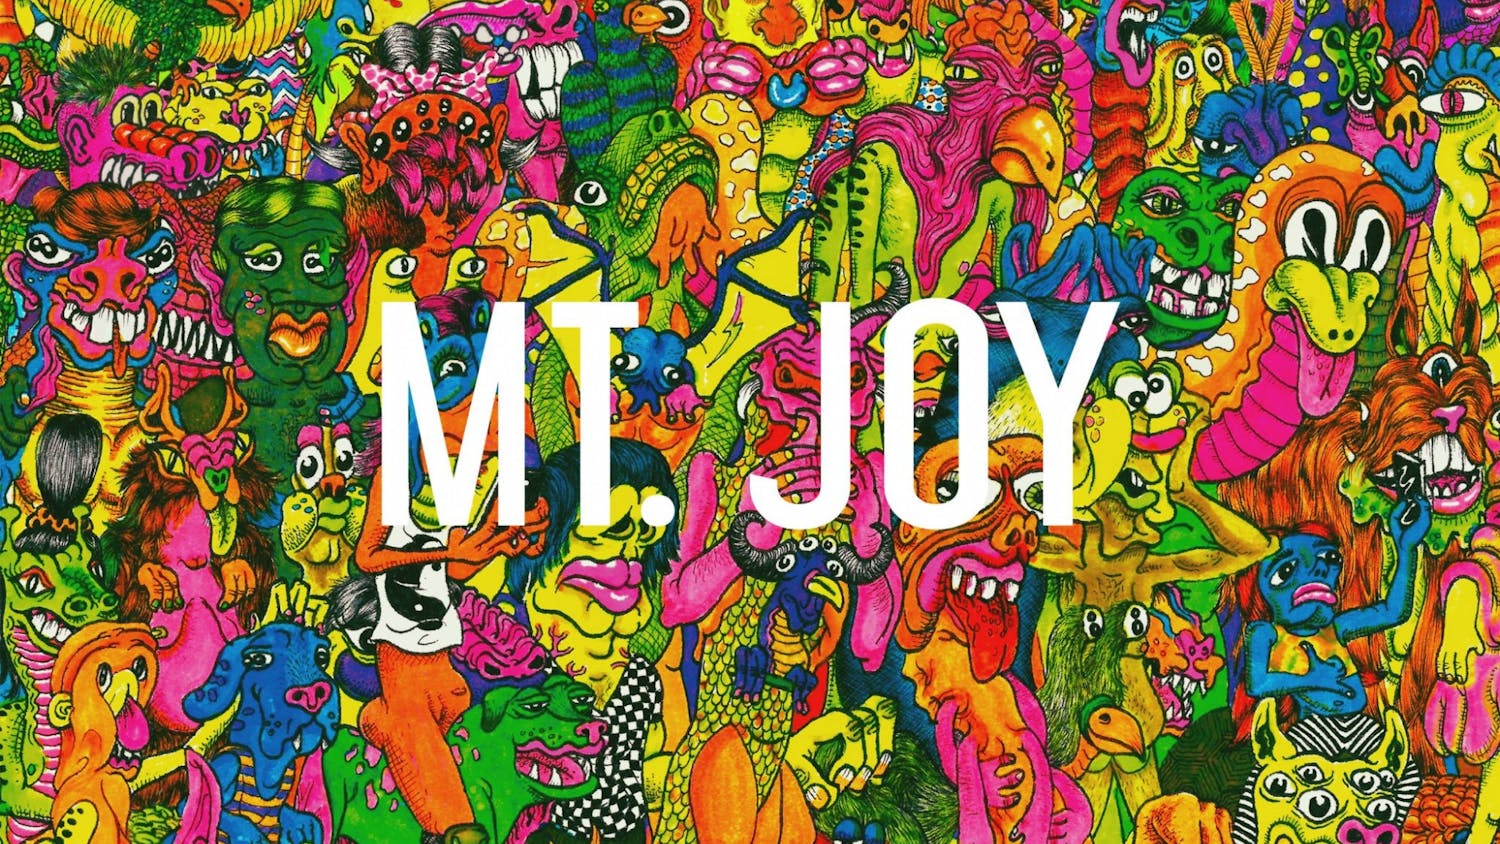 Mt Joy Orange Blood Album Cover.jpg